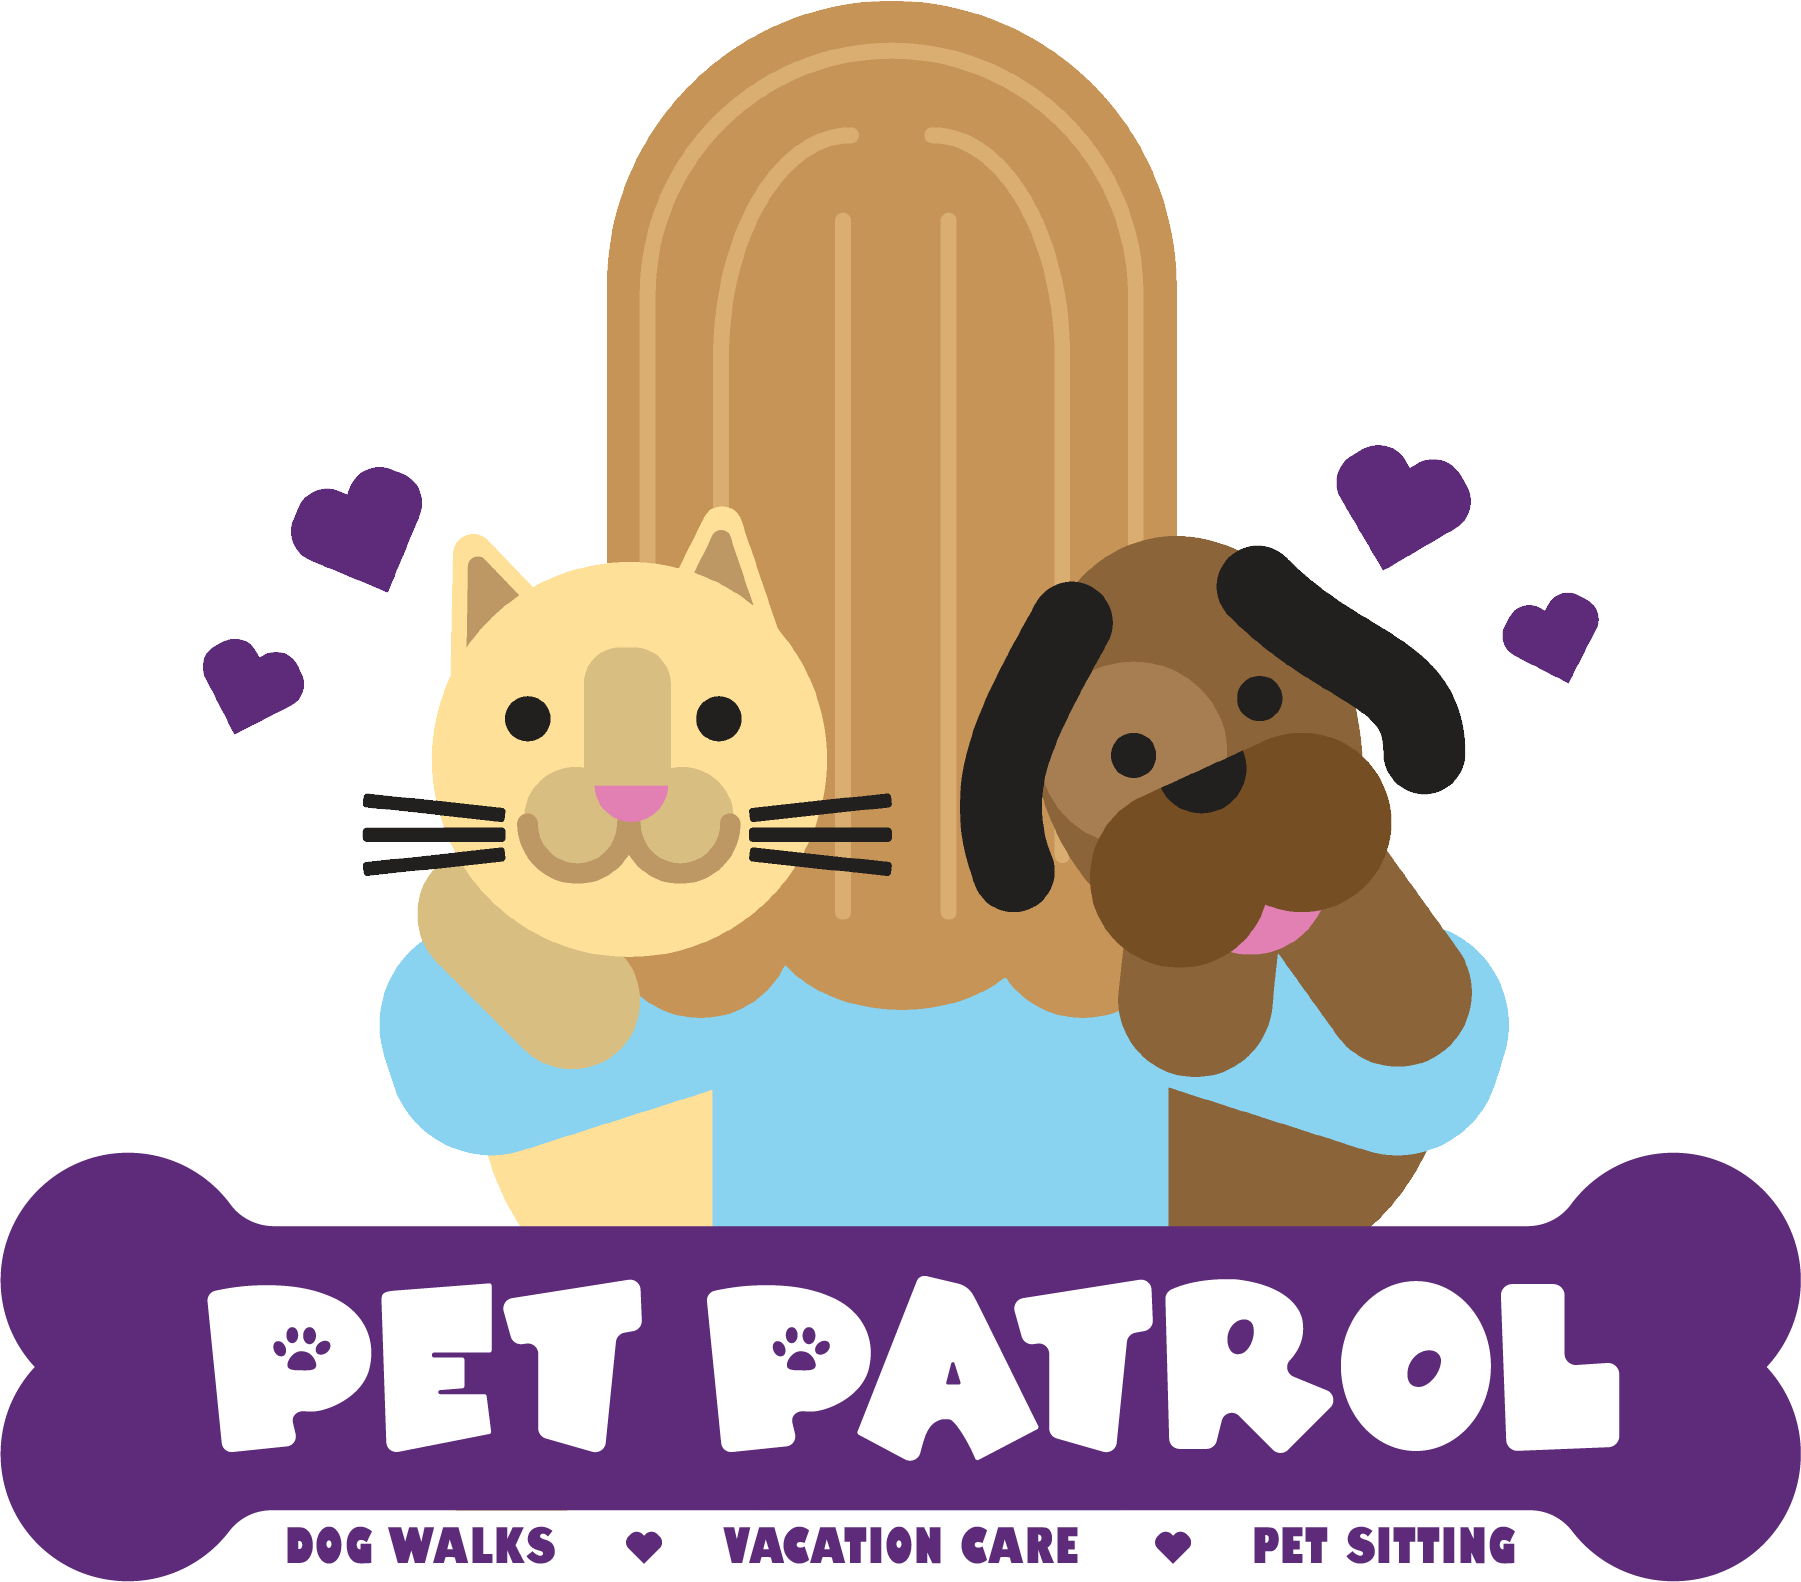  Pet Patrol - Orland Park, IL   http://pet-patrol.net/  